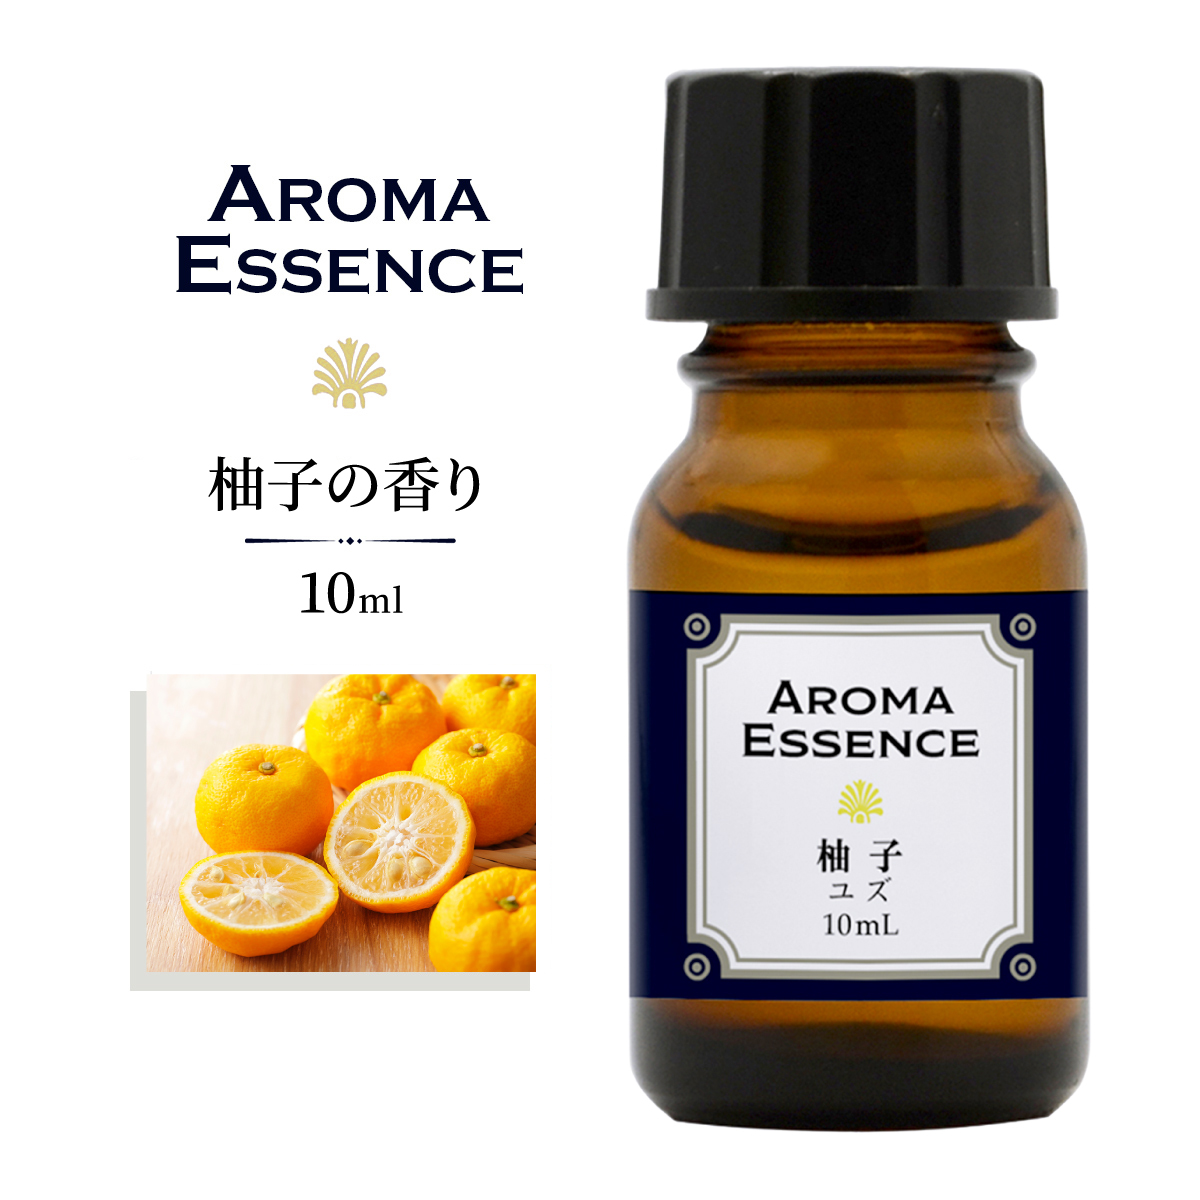  aroma essence .. масло 10ml aroma масло yuzu yuzu масло .. аромат для салон аромат диффузор style . ароматические вещества 